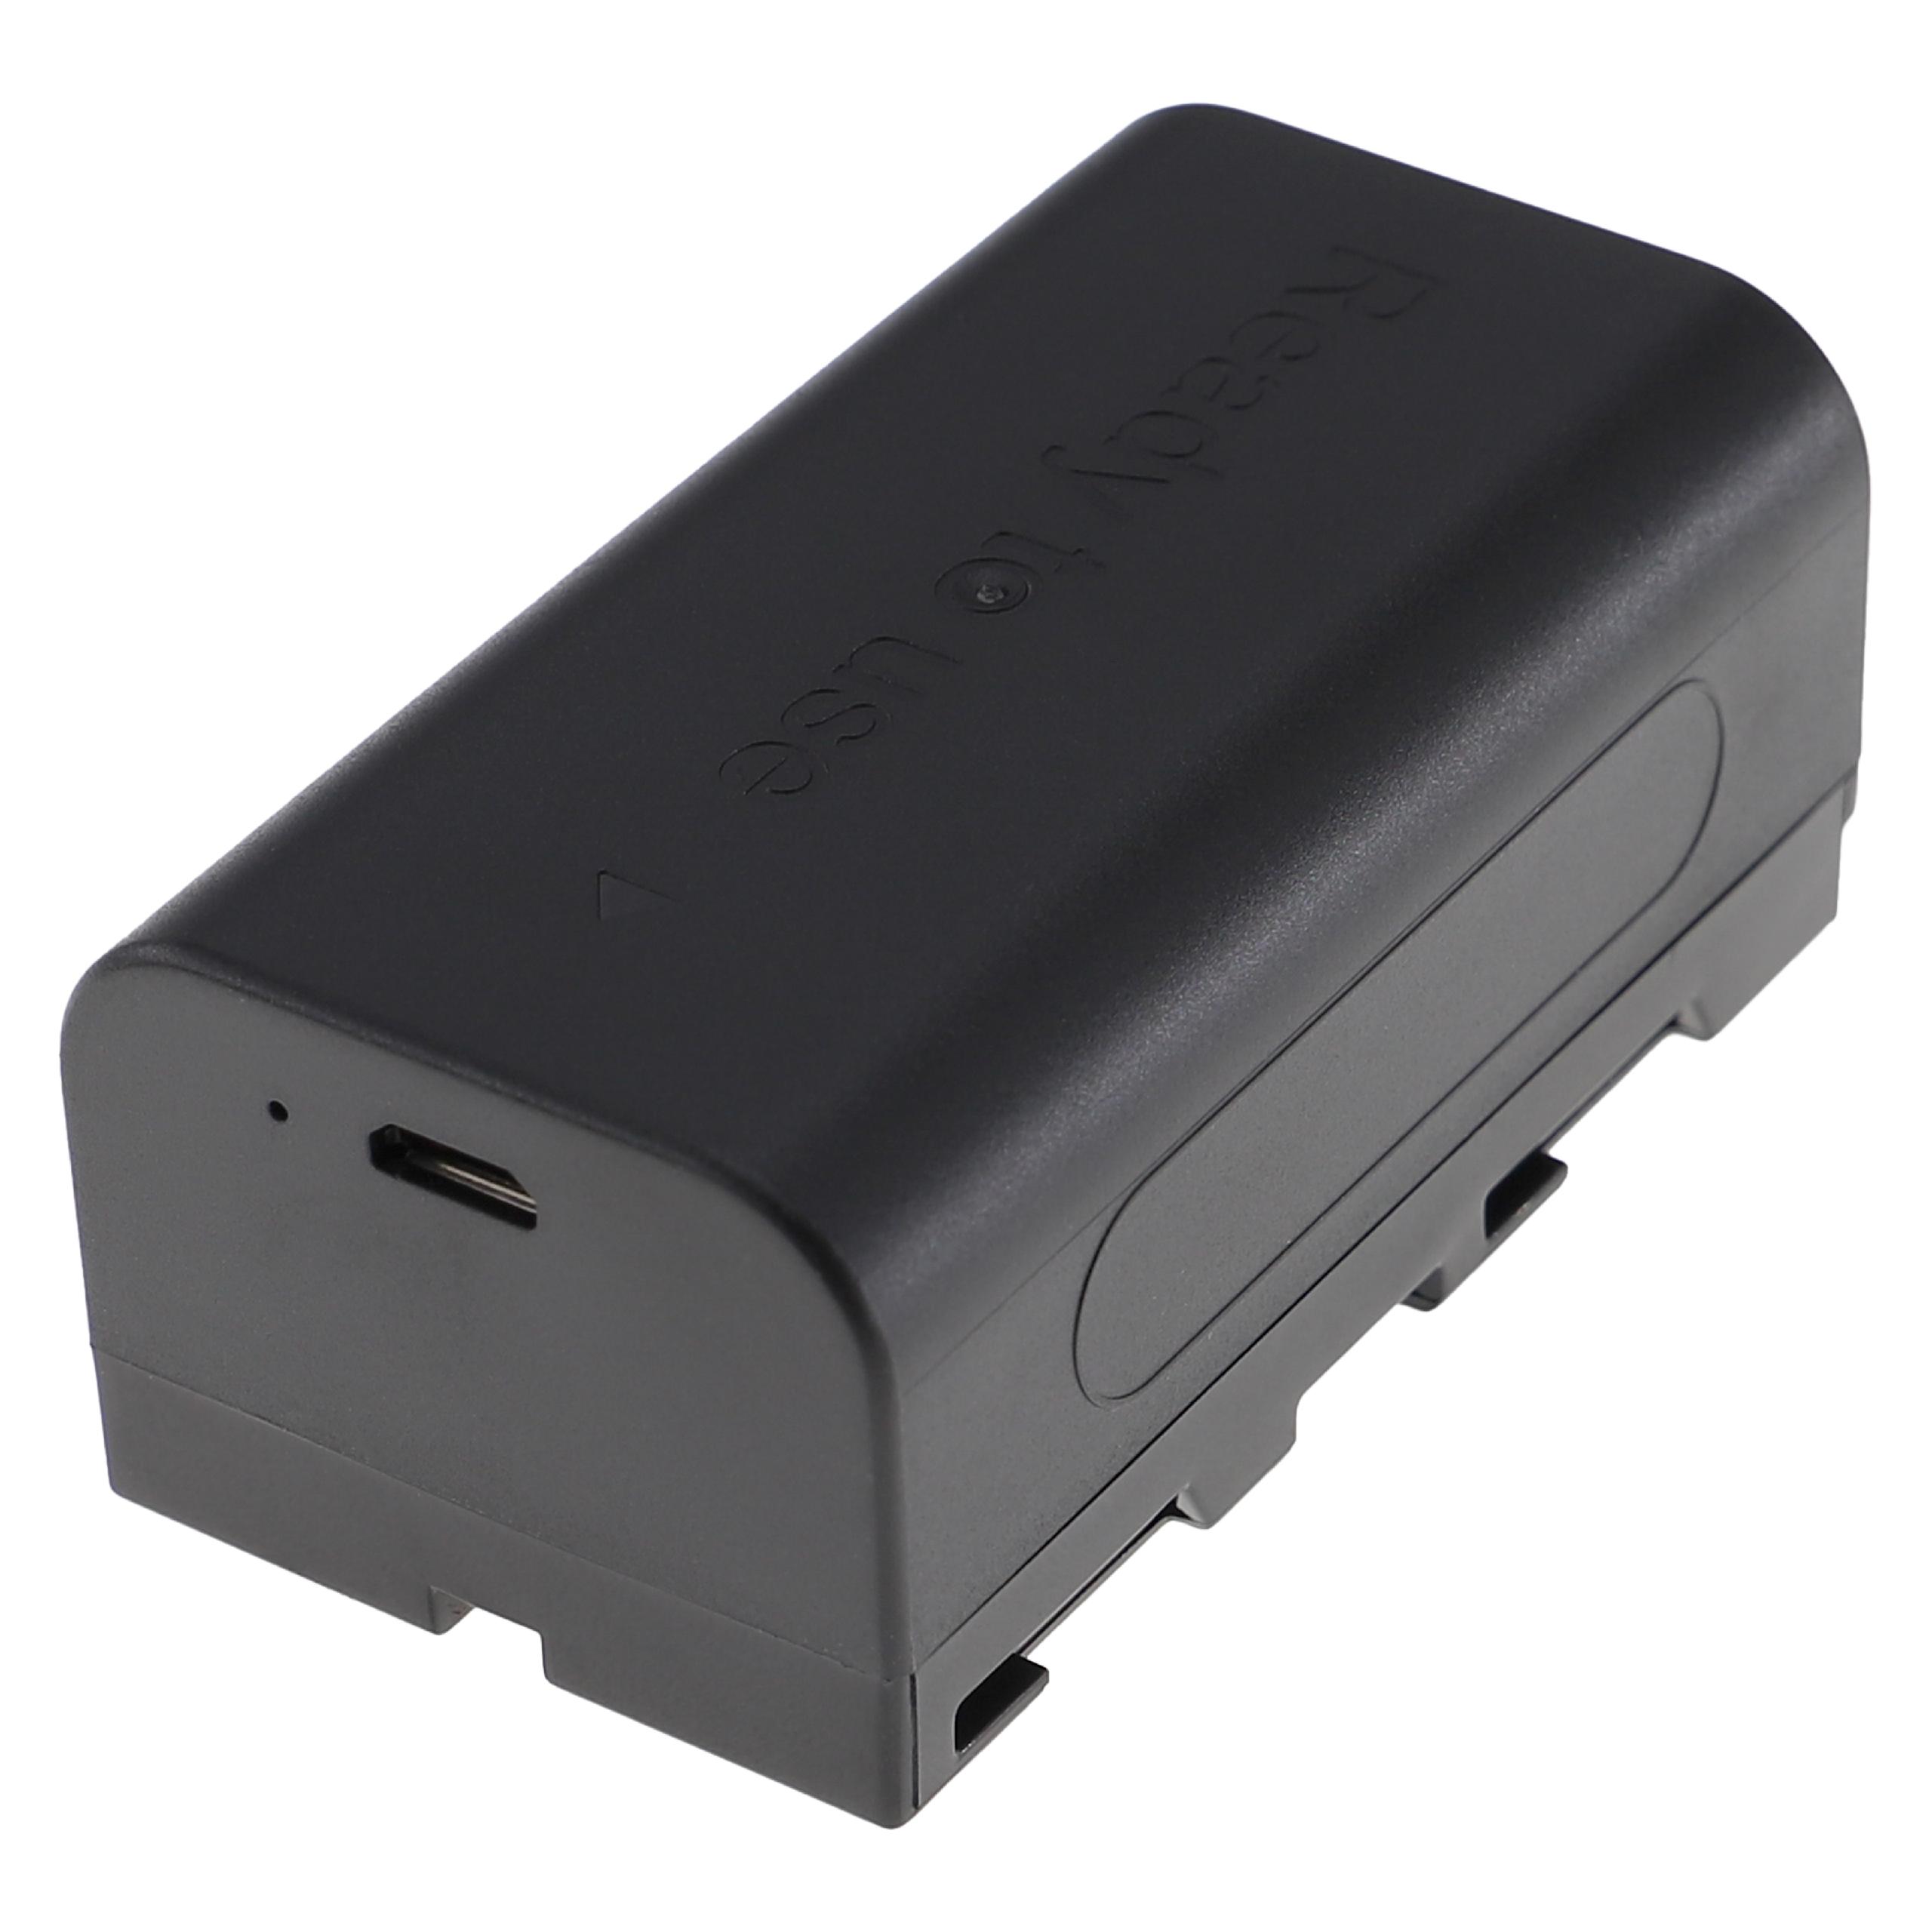 Akumulator do aparatu cyfrowego zamiennik Sony NP-F950, NP-F930/B, NP-F550, NP-F930 - 2000 mAh 7,4 V Li-Ion